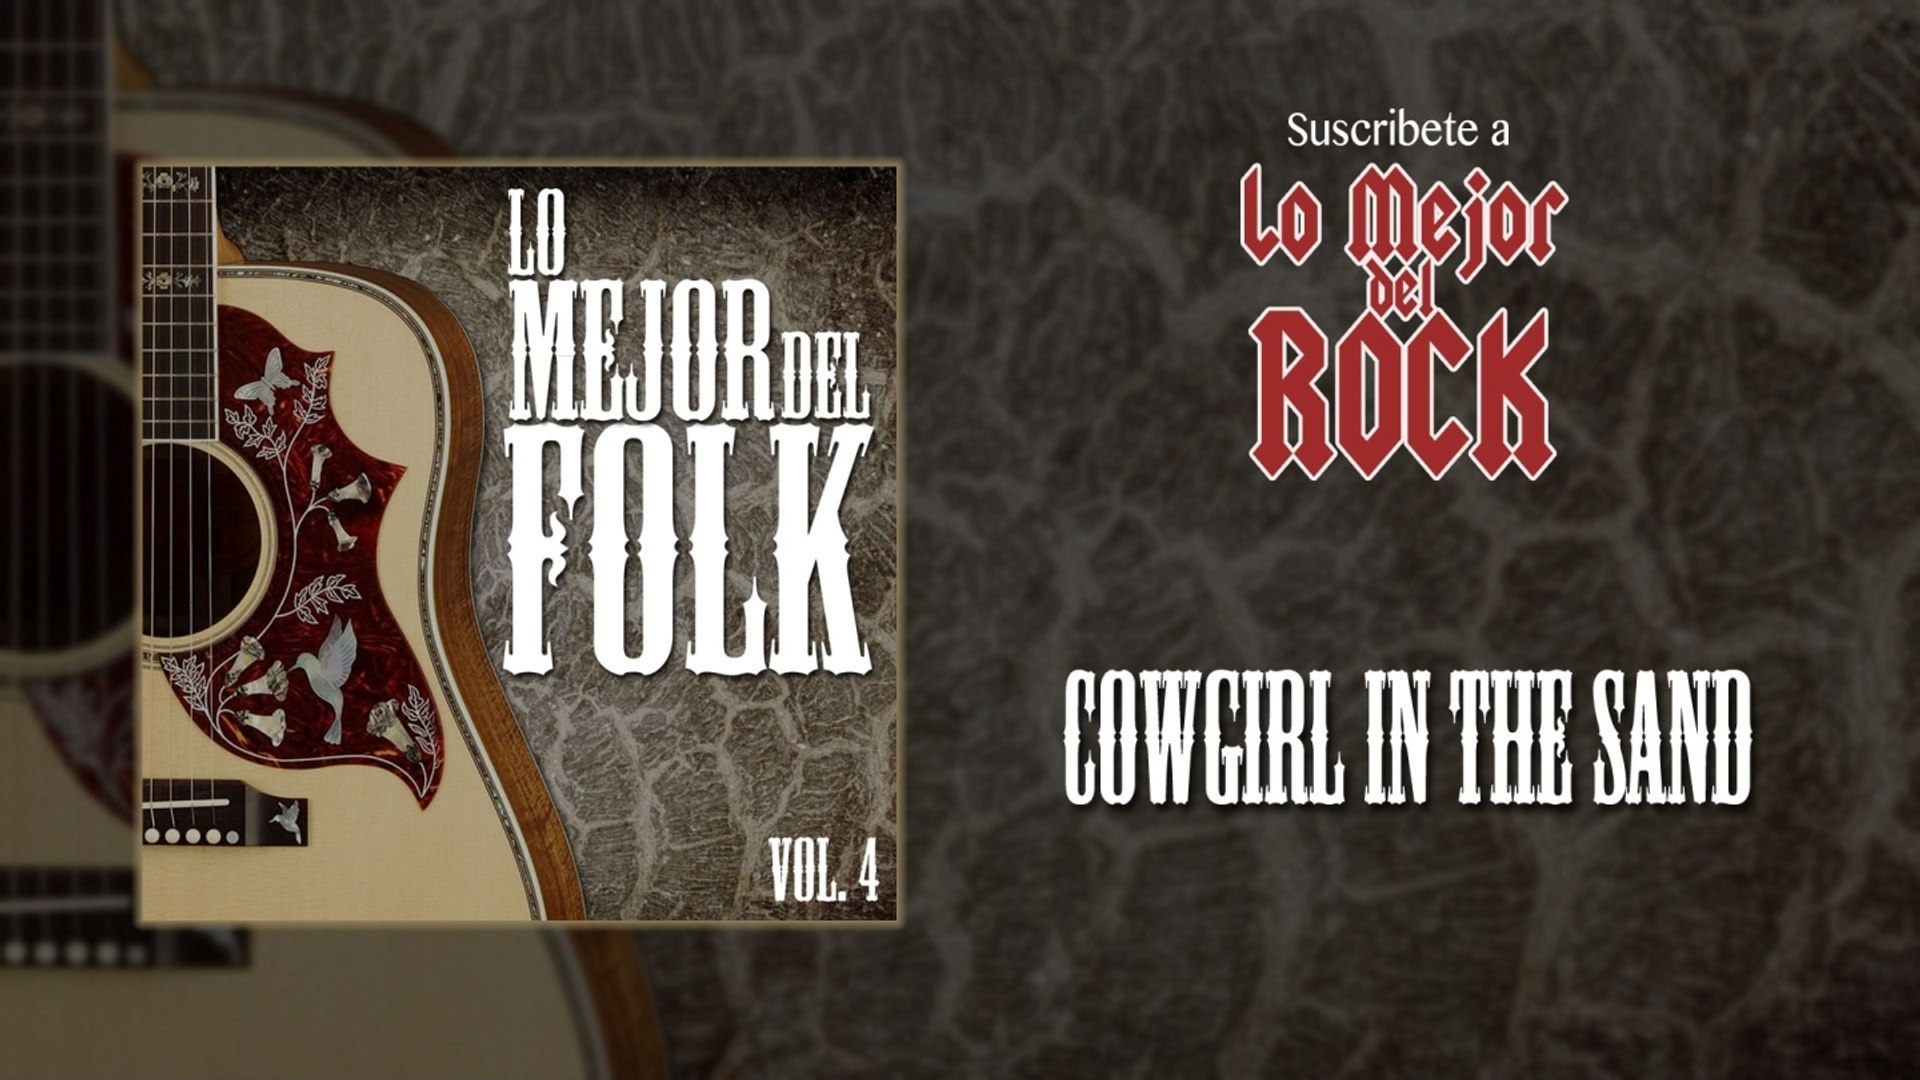 ⁣Lo Mejor del Folk, Vol. 4 - Cowgirl in the Sand